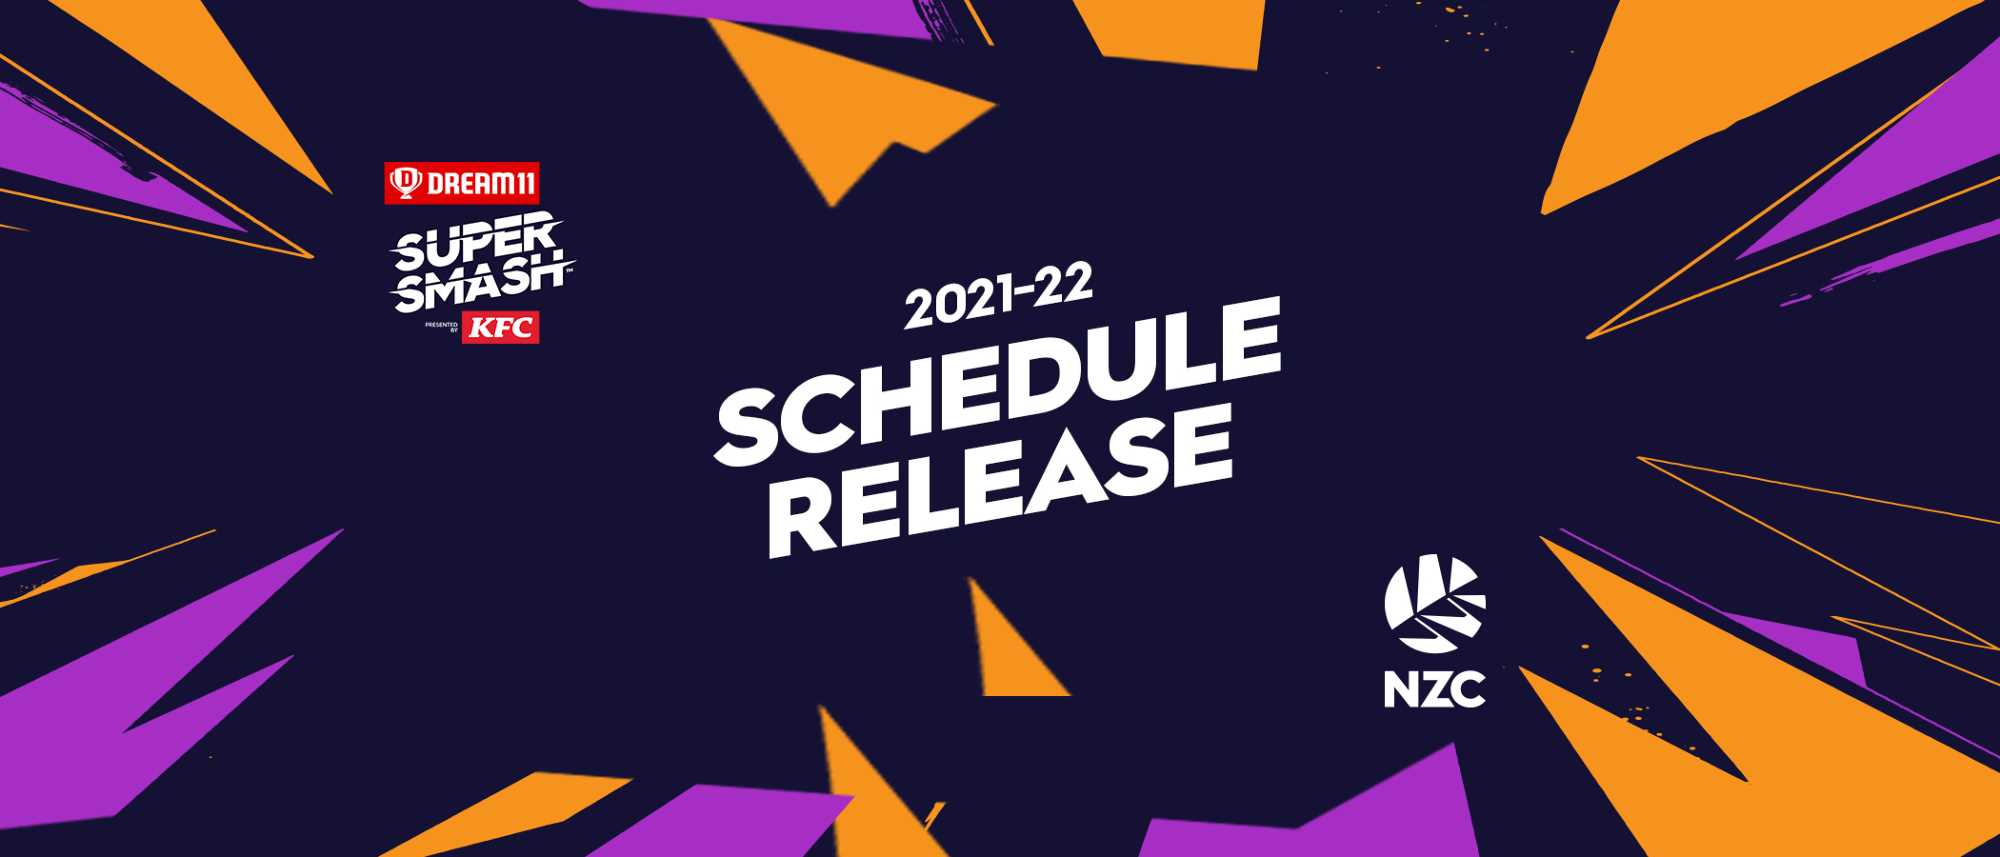 202122 Dream11 Super Smash Schedules Announced!